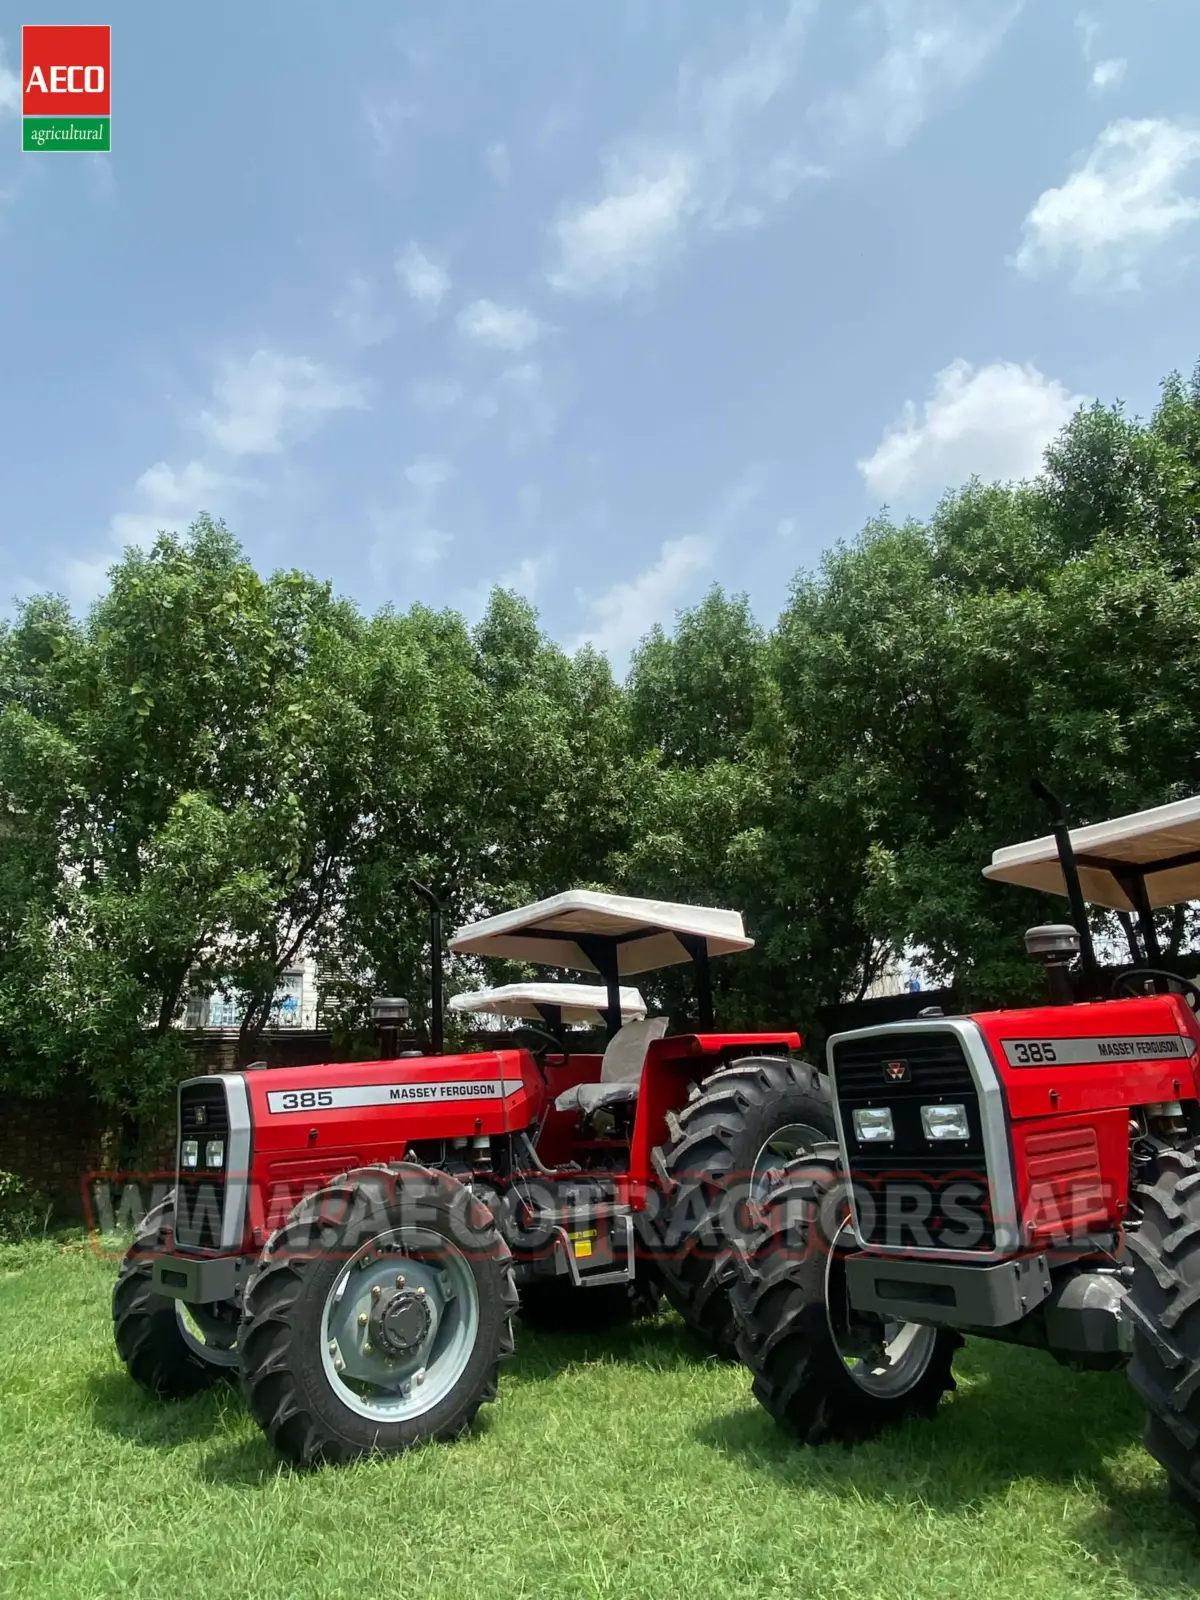 Massey Ferguson 385 4WD tractor - the perfect farming companion